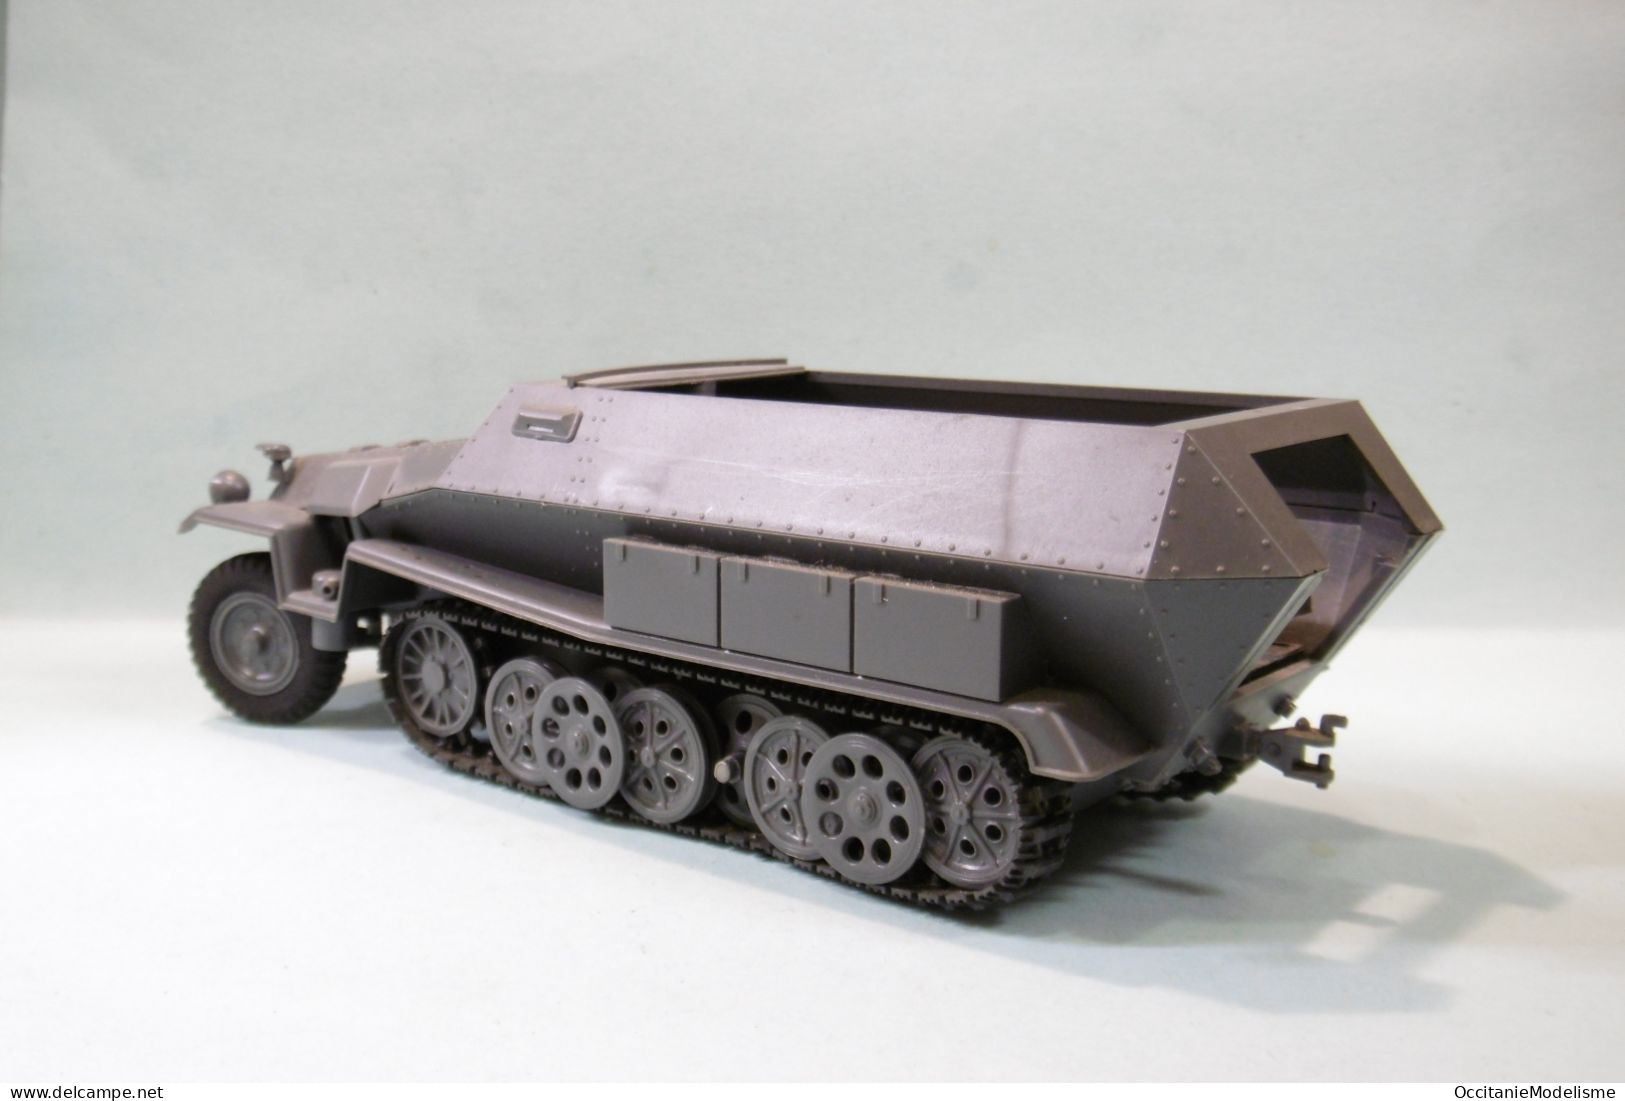 Tamiya - HANOMAG Sdkfz 251/1 + 5 figurines WWII militaire maquette kit plastique réf. 35020 BO 1/35